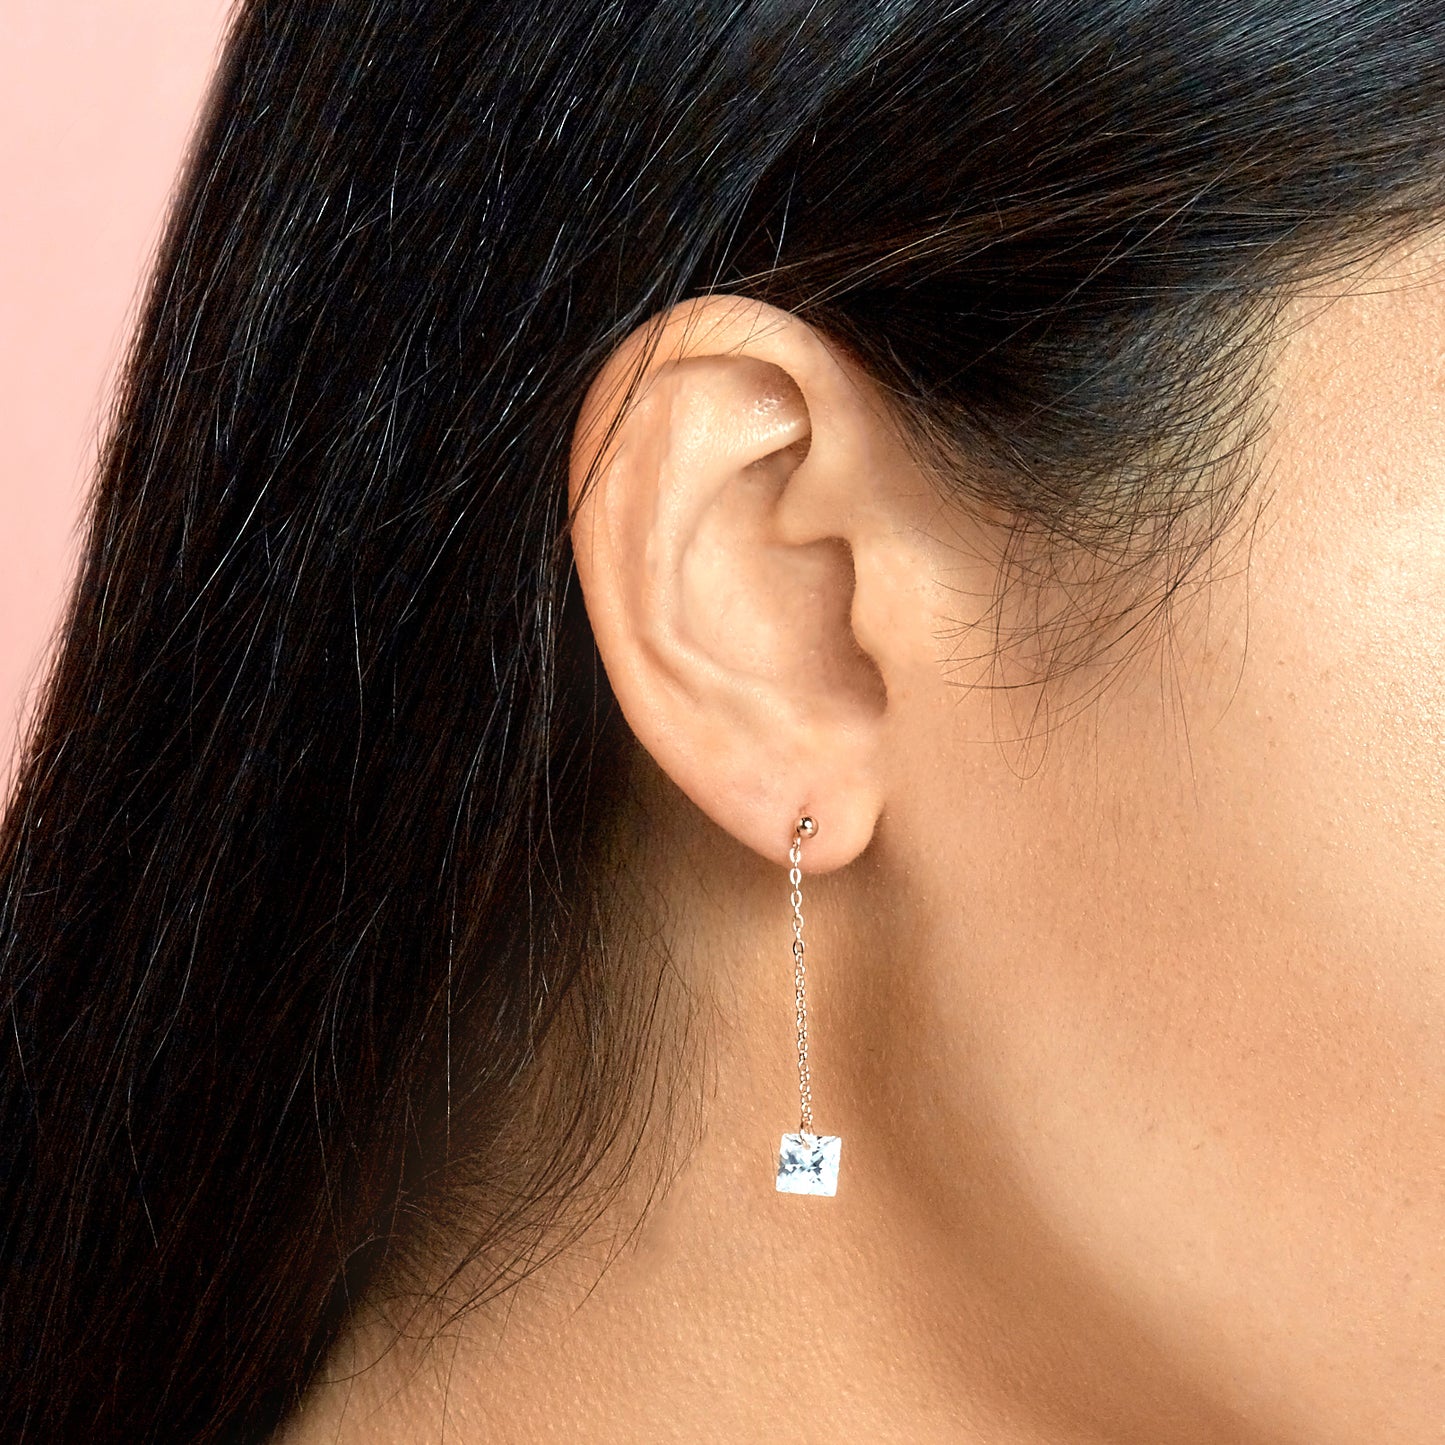 Topfoxx Jewelry Sterling Silver Earrings Enlightened Gold Clear Crystal